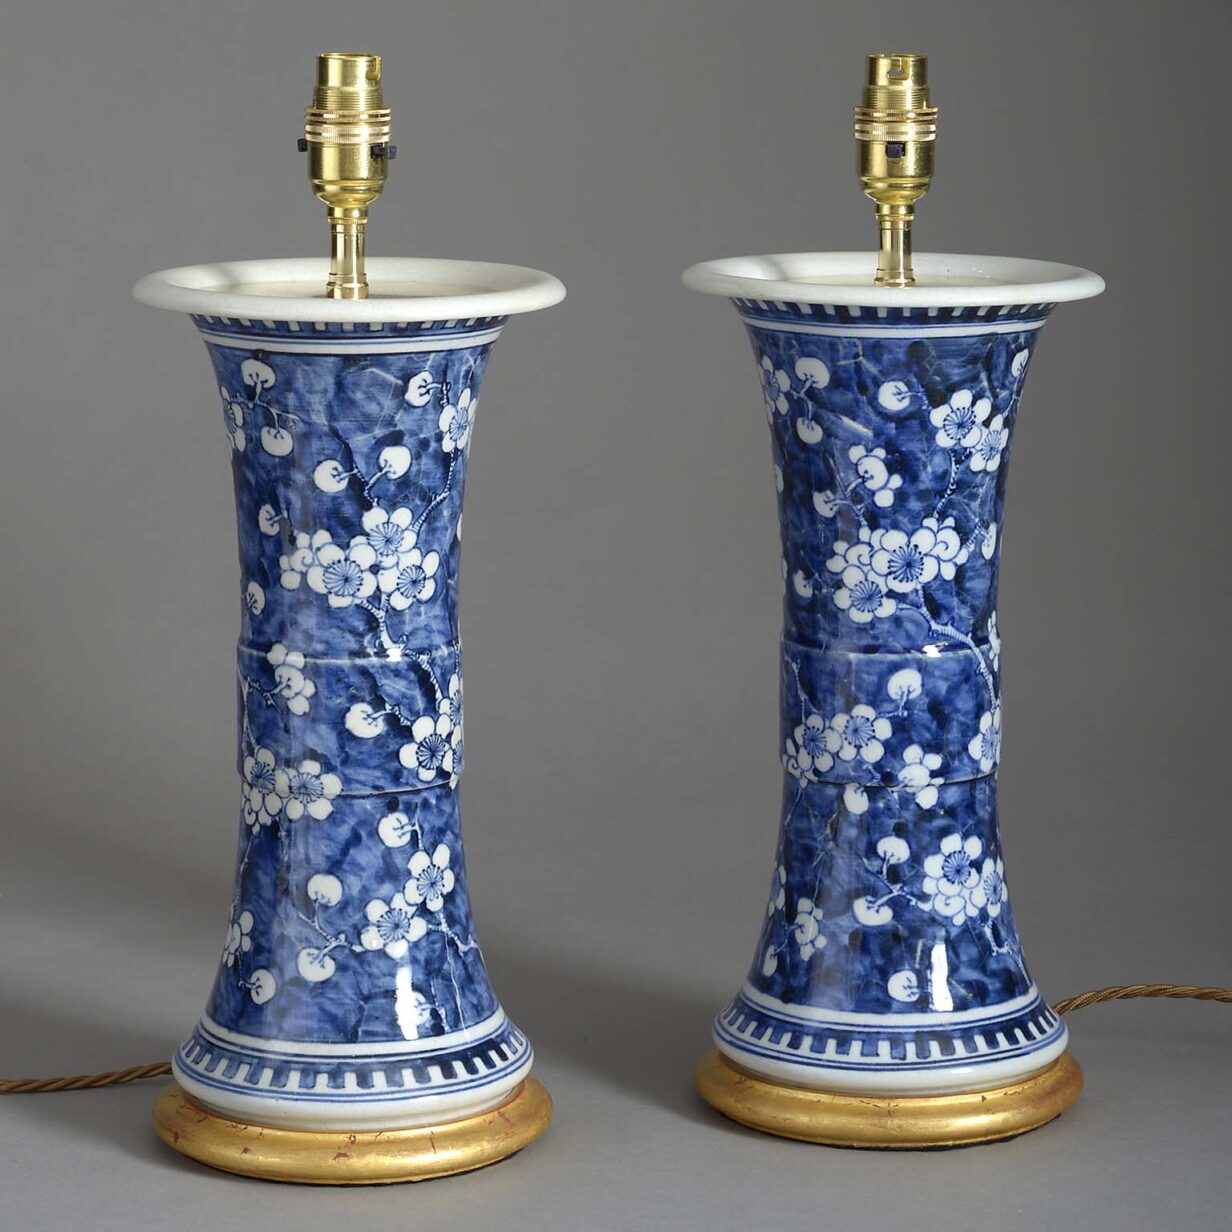 Pair of blue and white beaker vase lamps